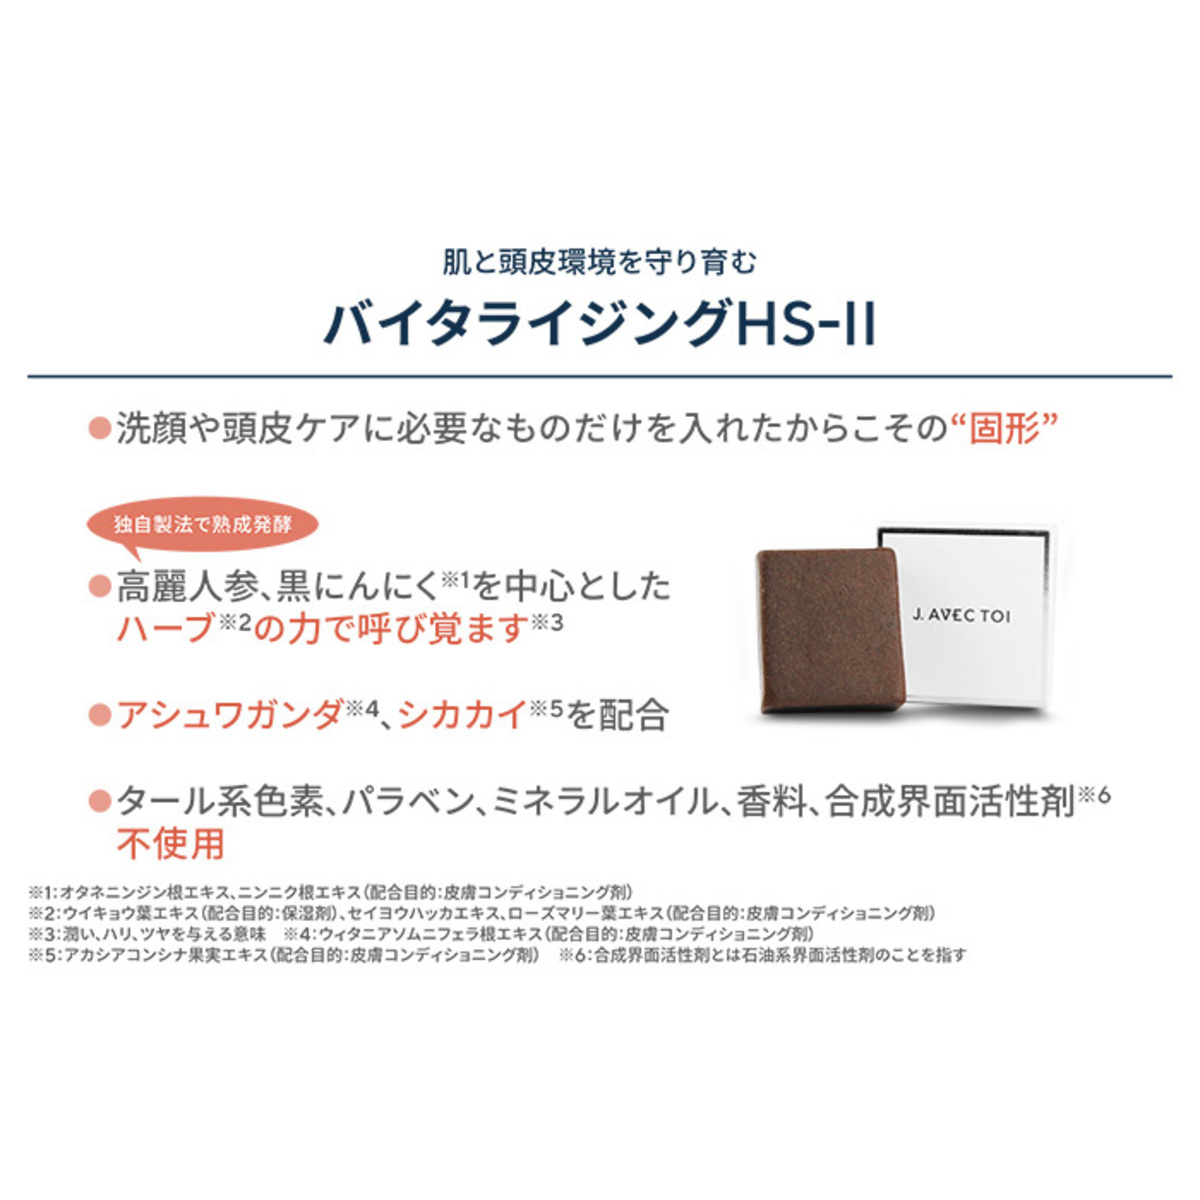 J.avectoiバイタライジングHS-II3個オレンジパッケージ - QVC.jp